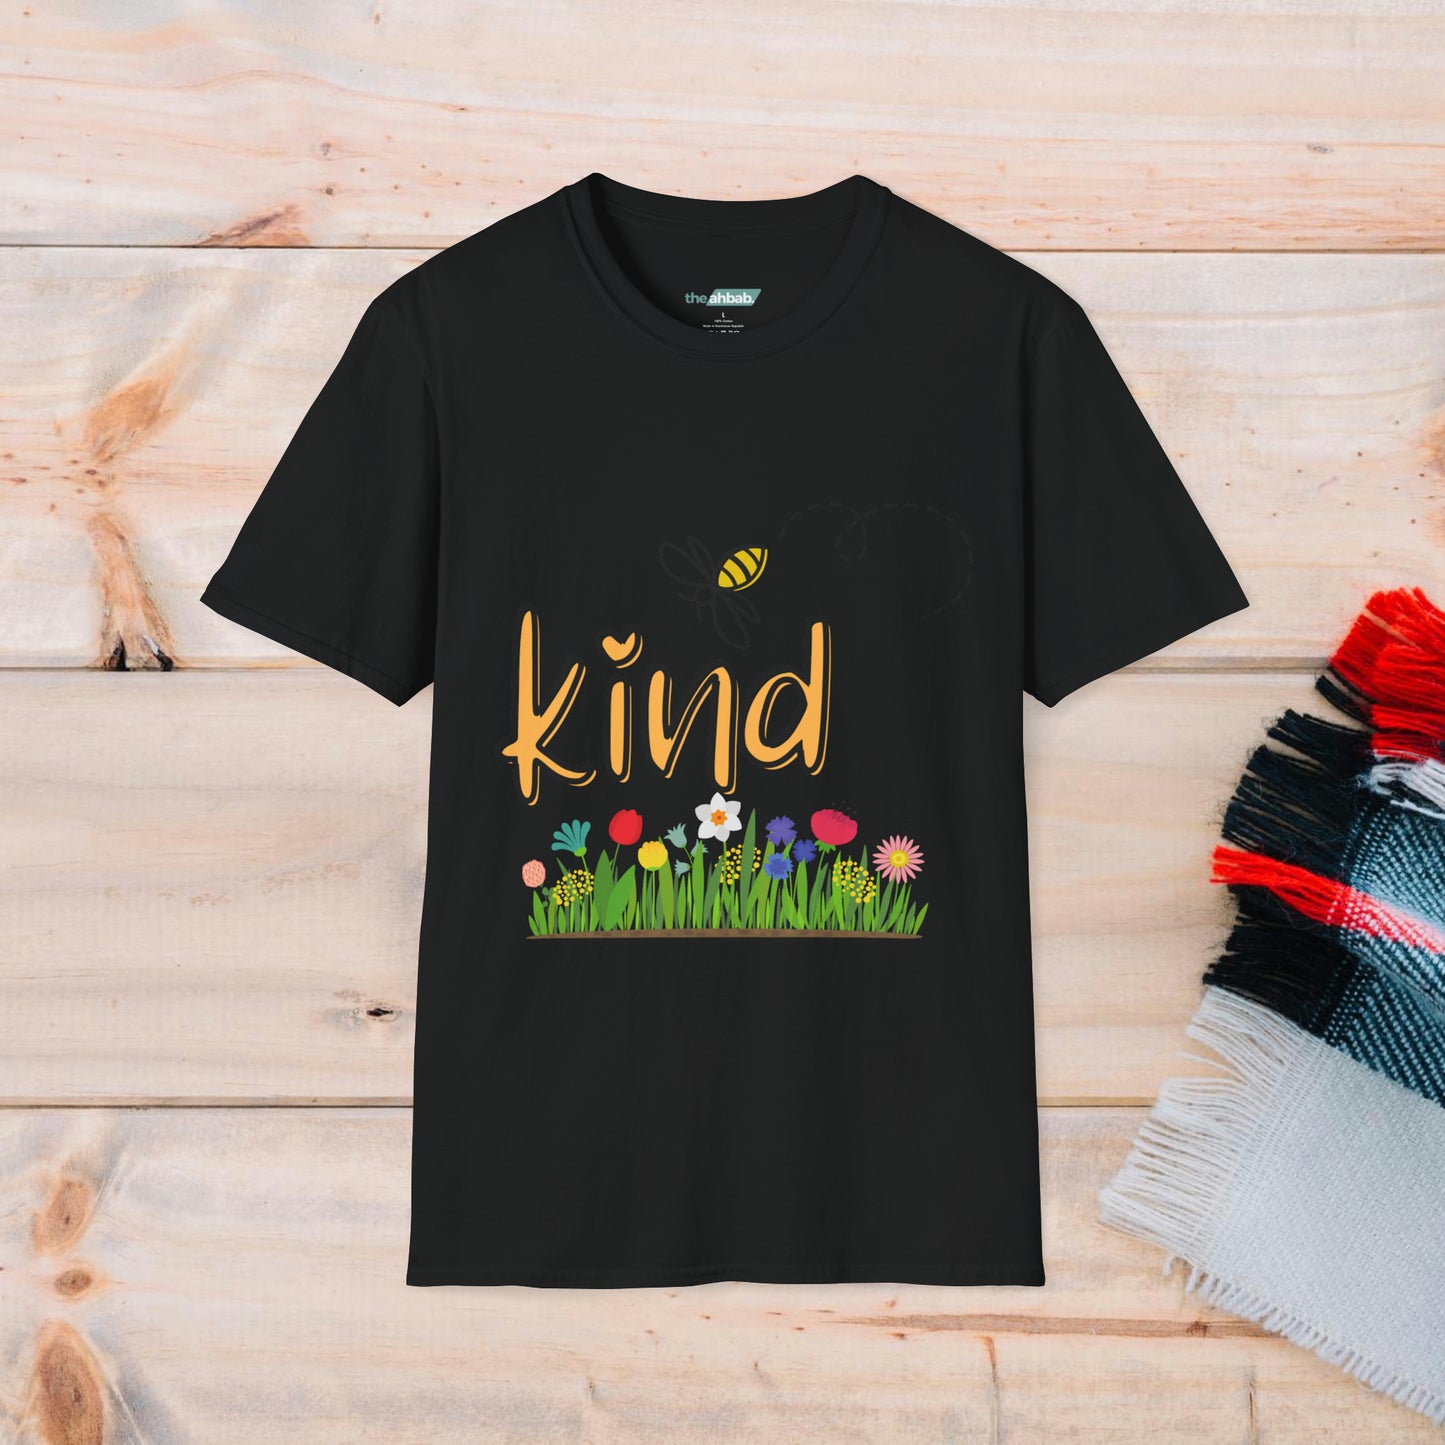 Be kind Variant 1 T-shirt